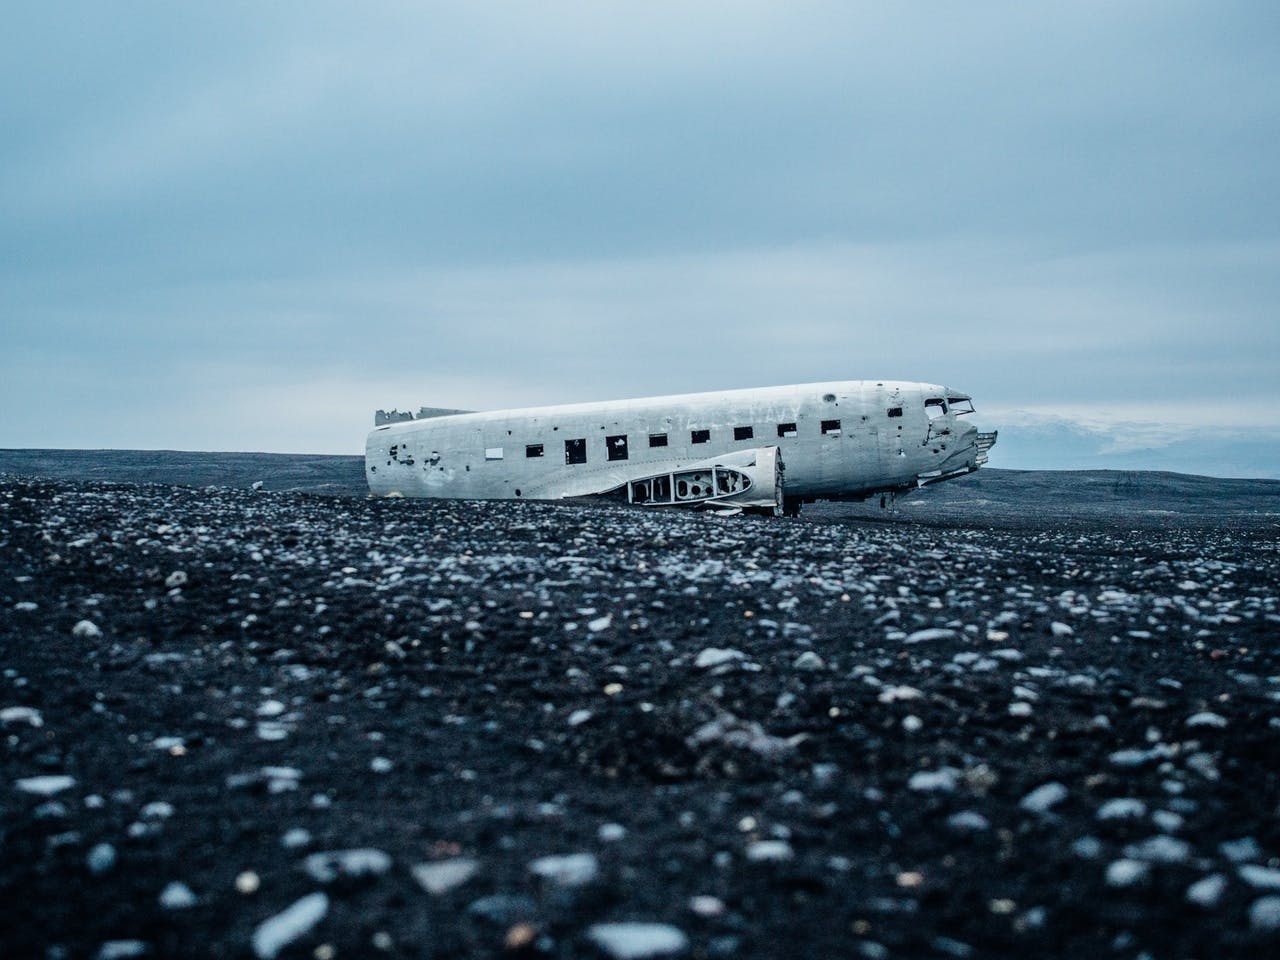 A crashed, weathered airplane lies abandoned on a desolate, rocky beach under an overcast sky.